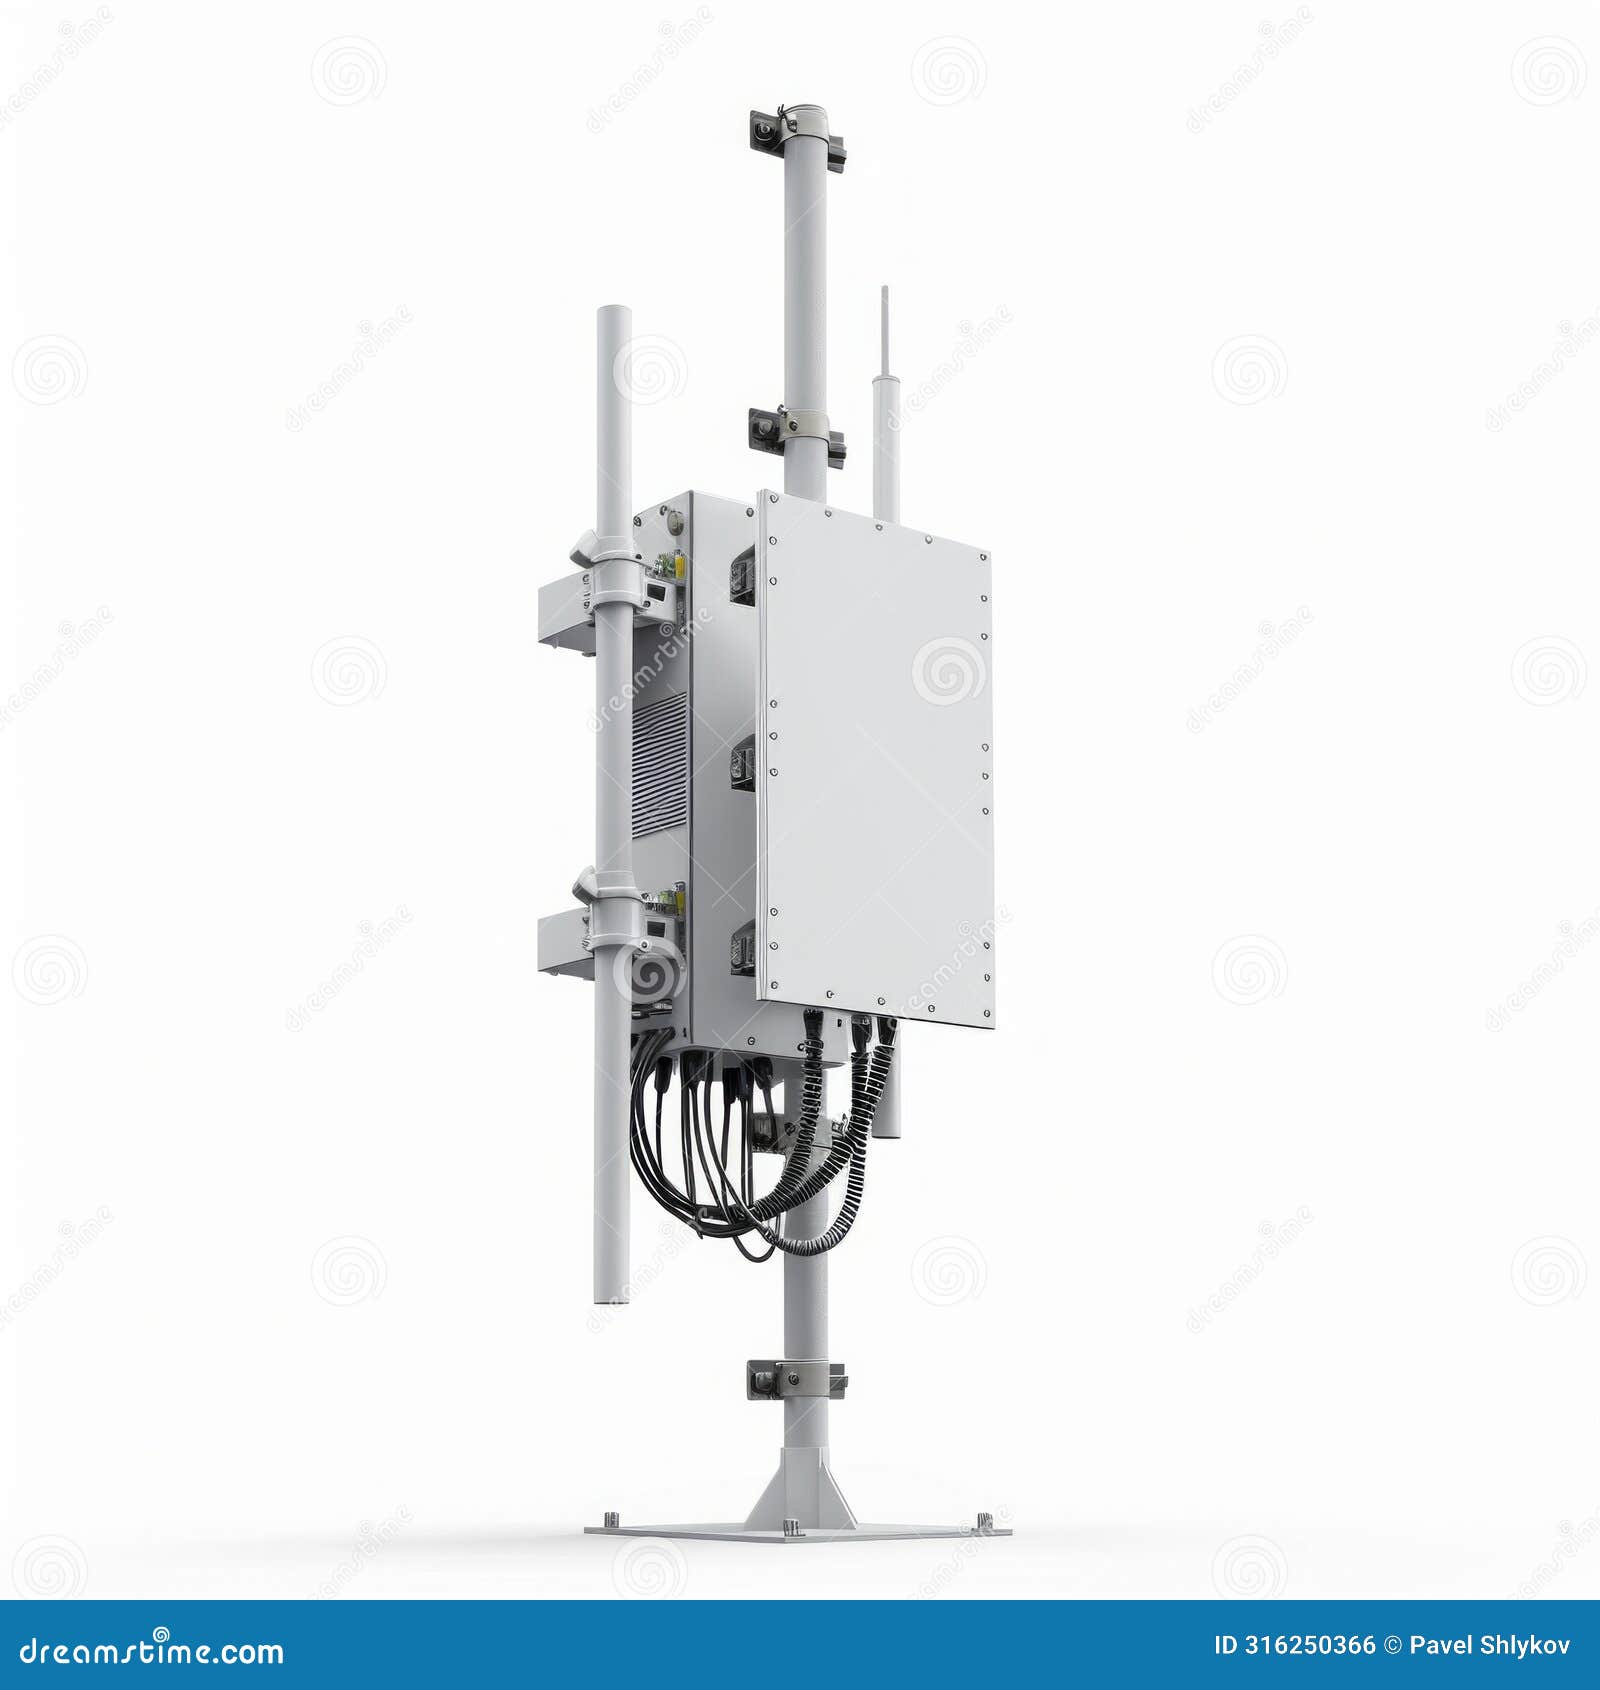 telecommunication pole of 4g and 5g cellular. base station or base transceiver station. wireless communication antenna